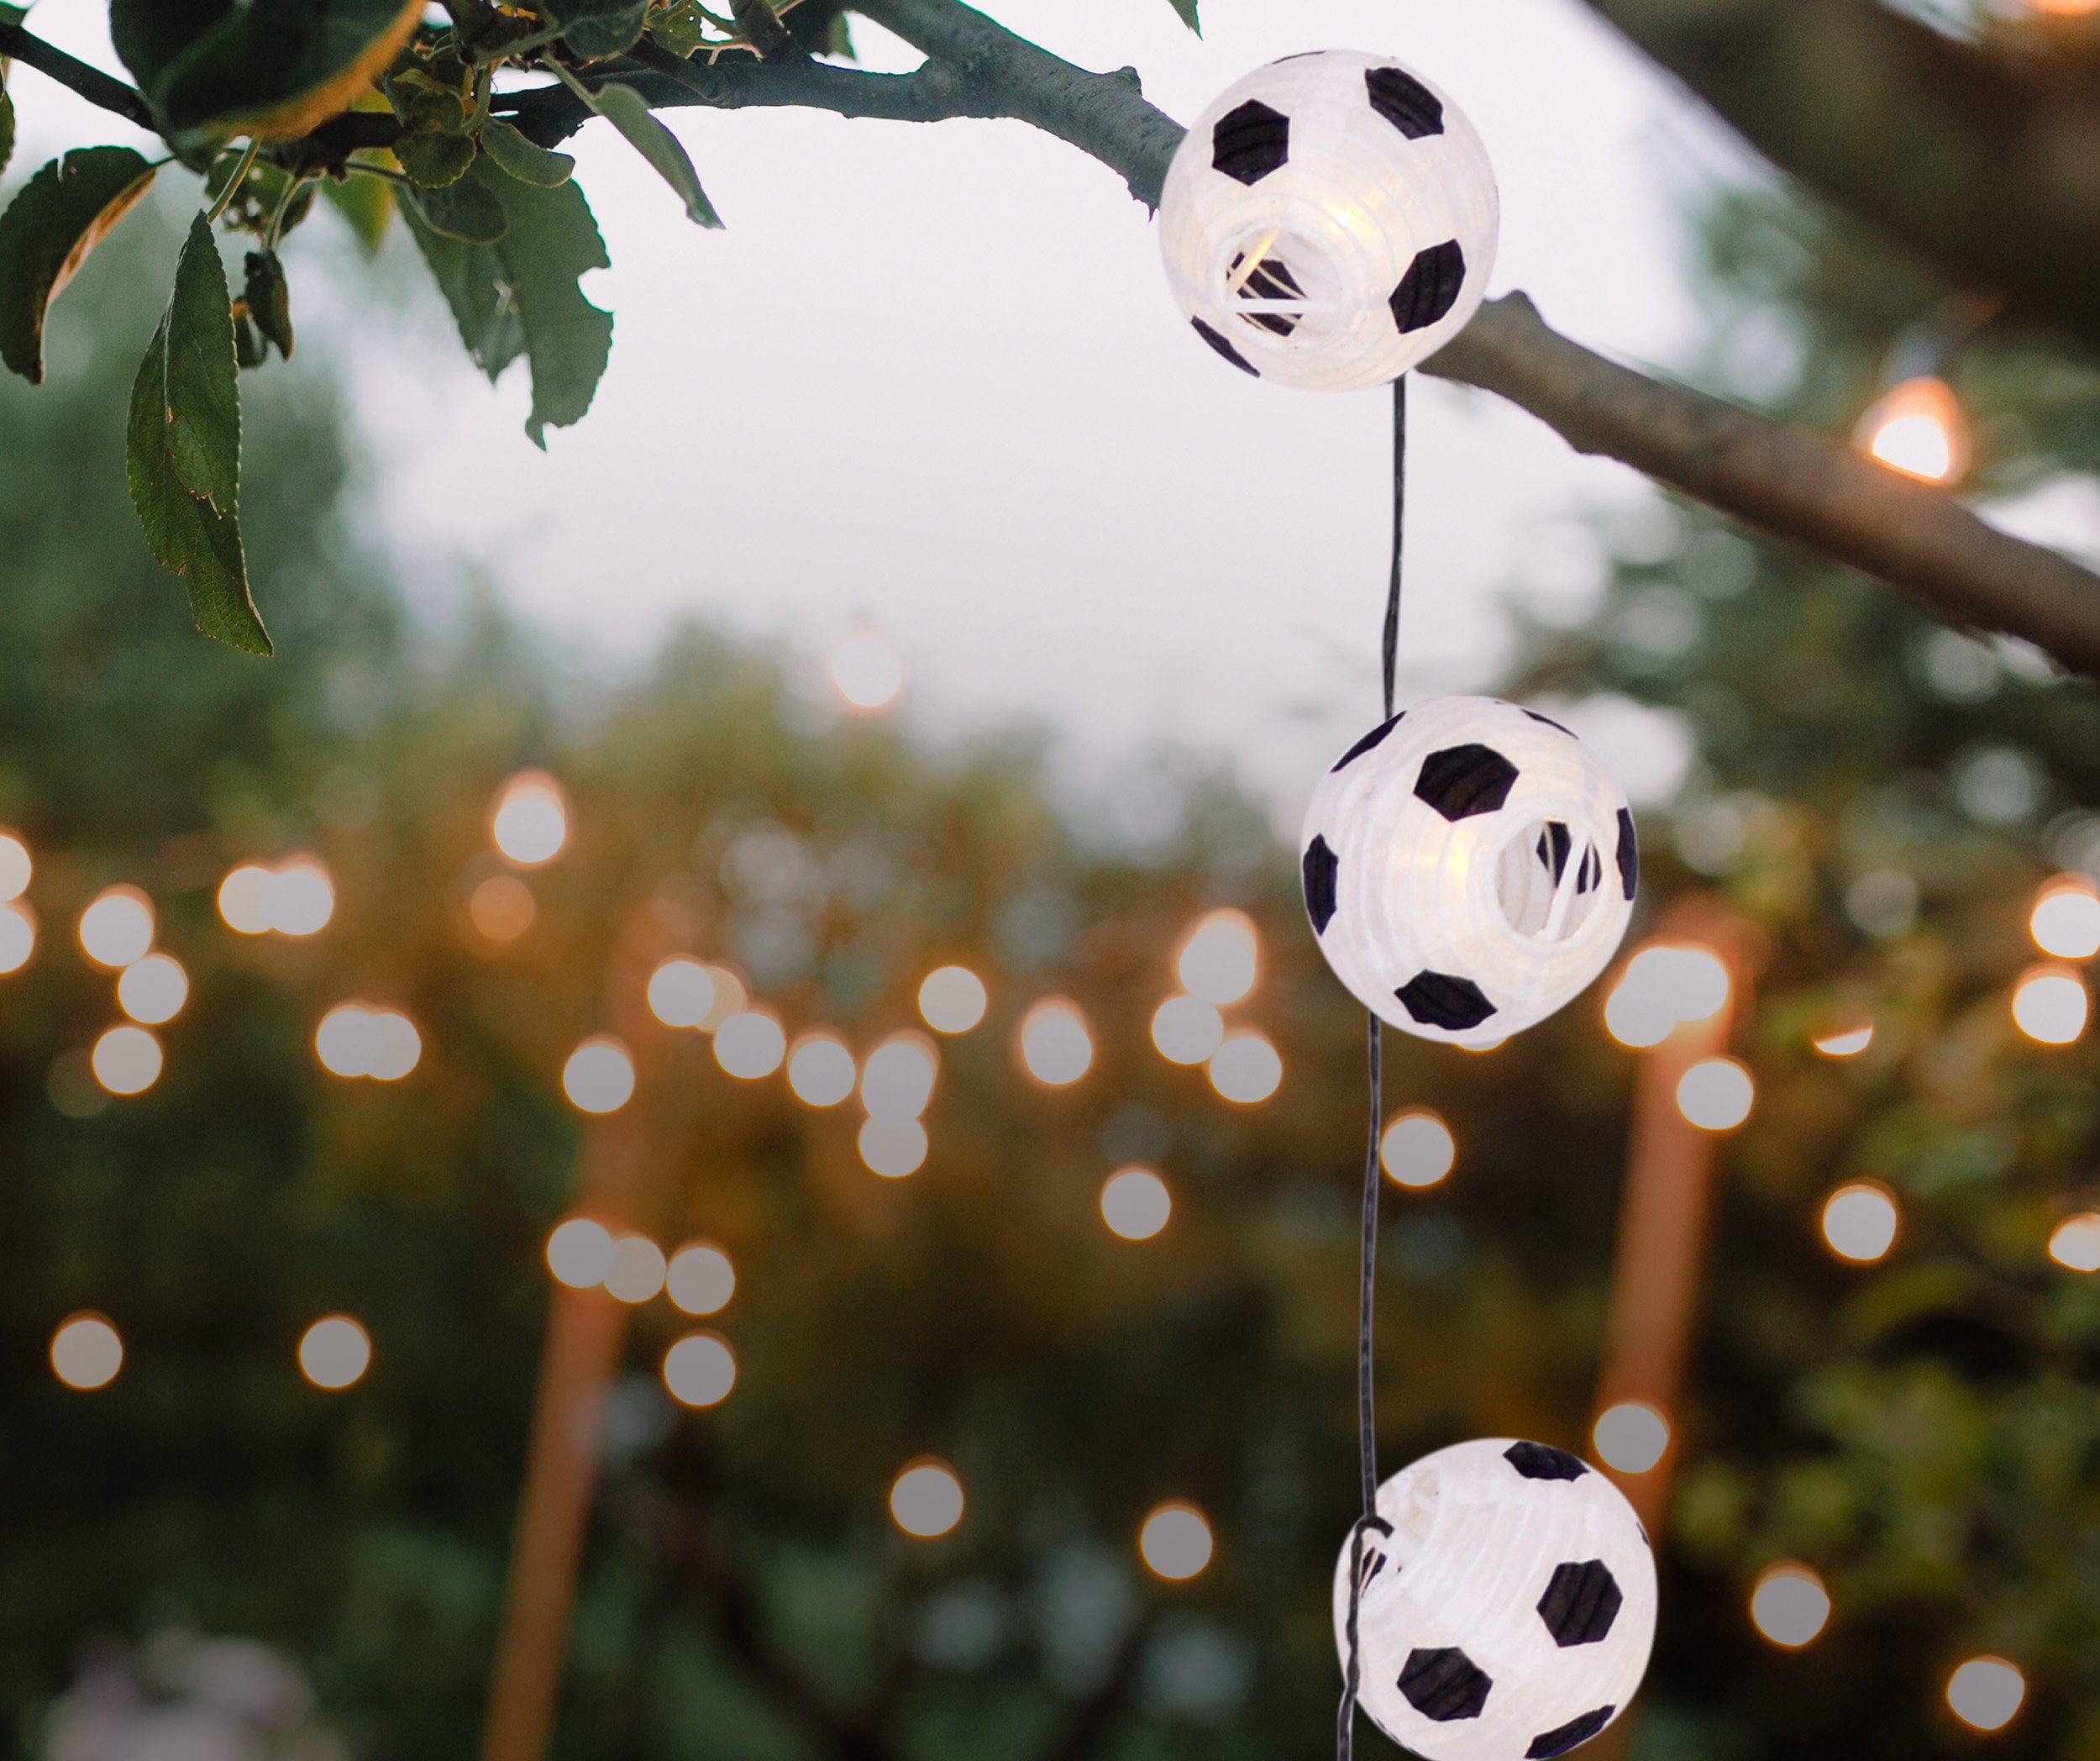 näve Farbe: Polyester, Material: Metall, Kunststoff, weiß/schwarz Fußball, Japanballon-20er-Solar-Lichterkette, Lichterkette